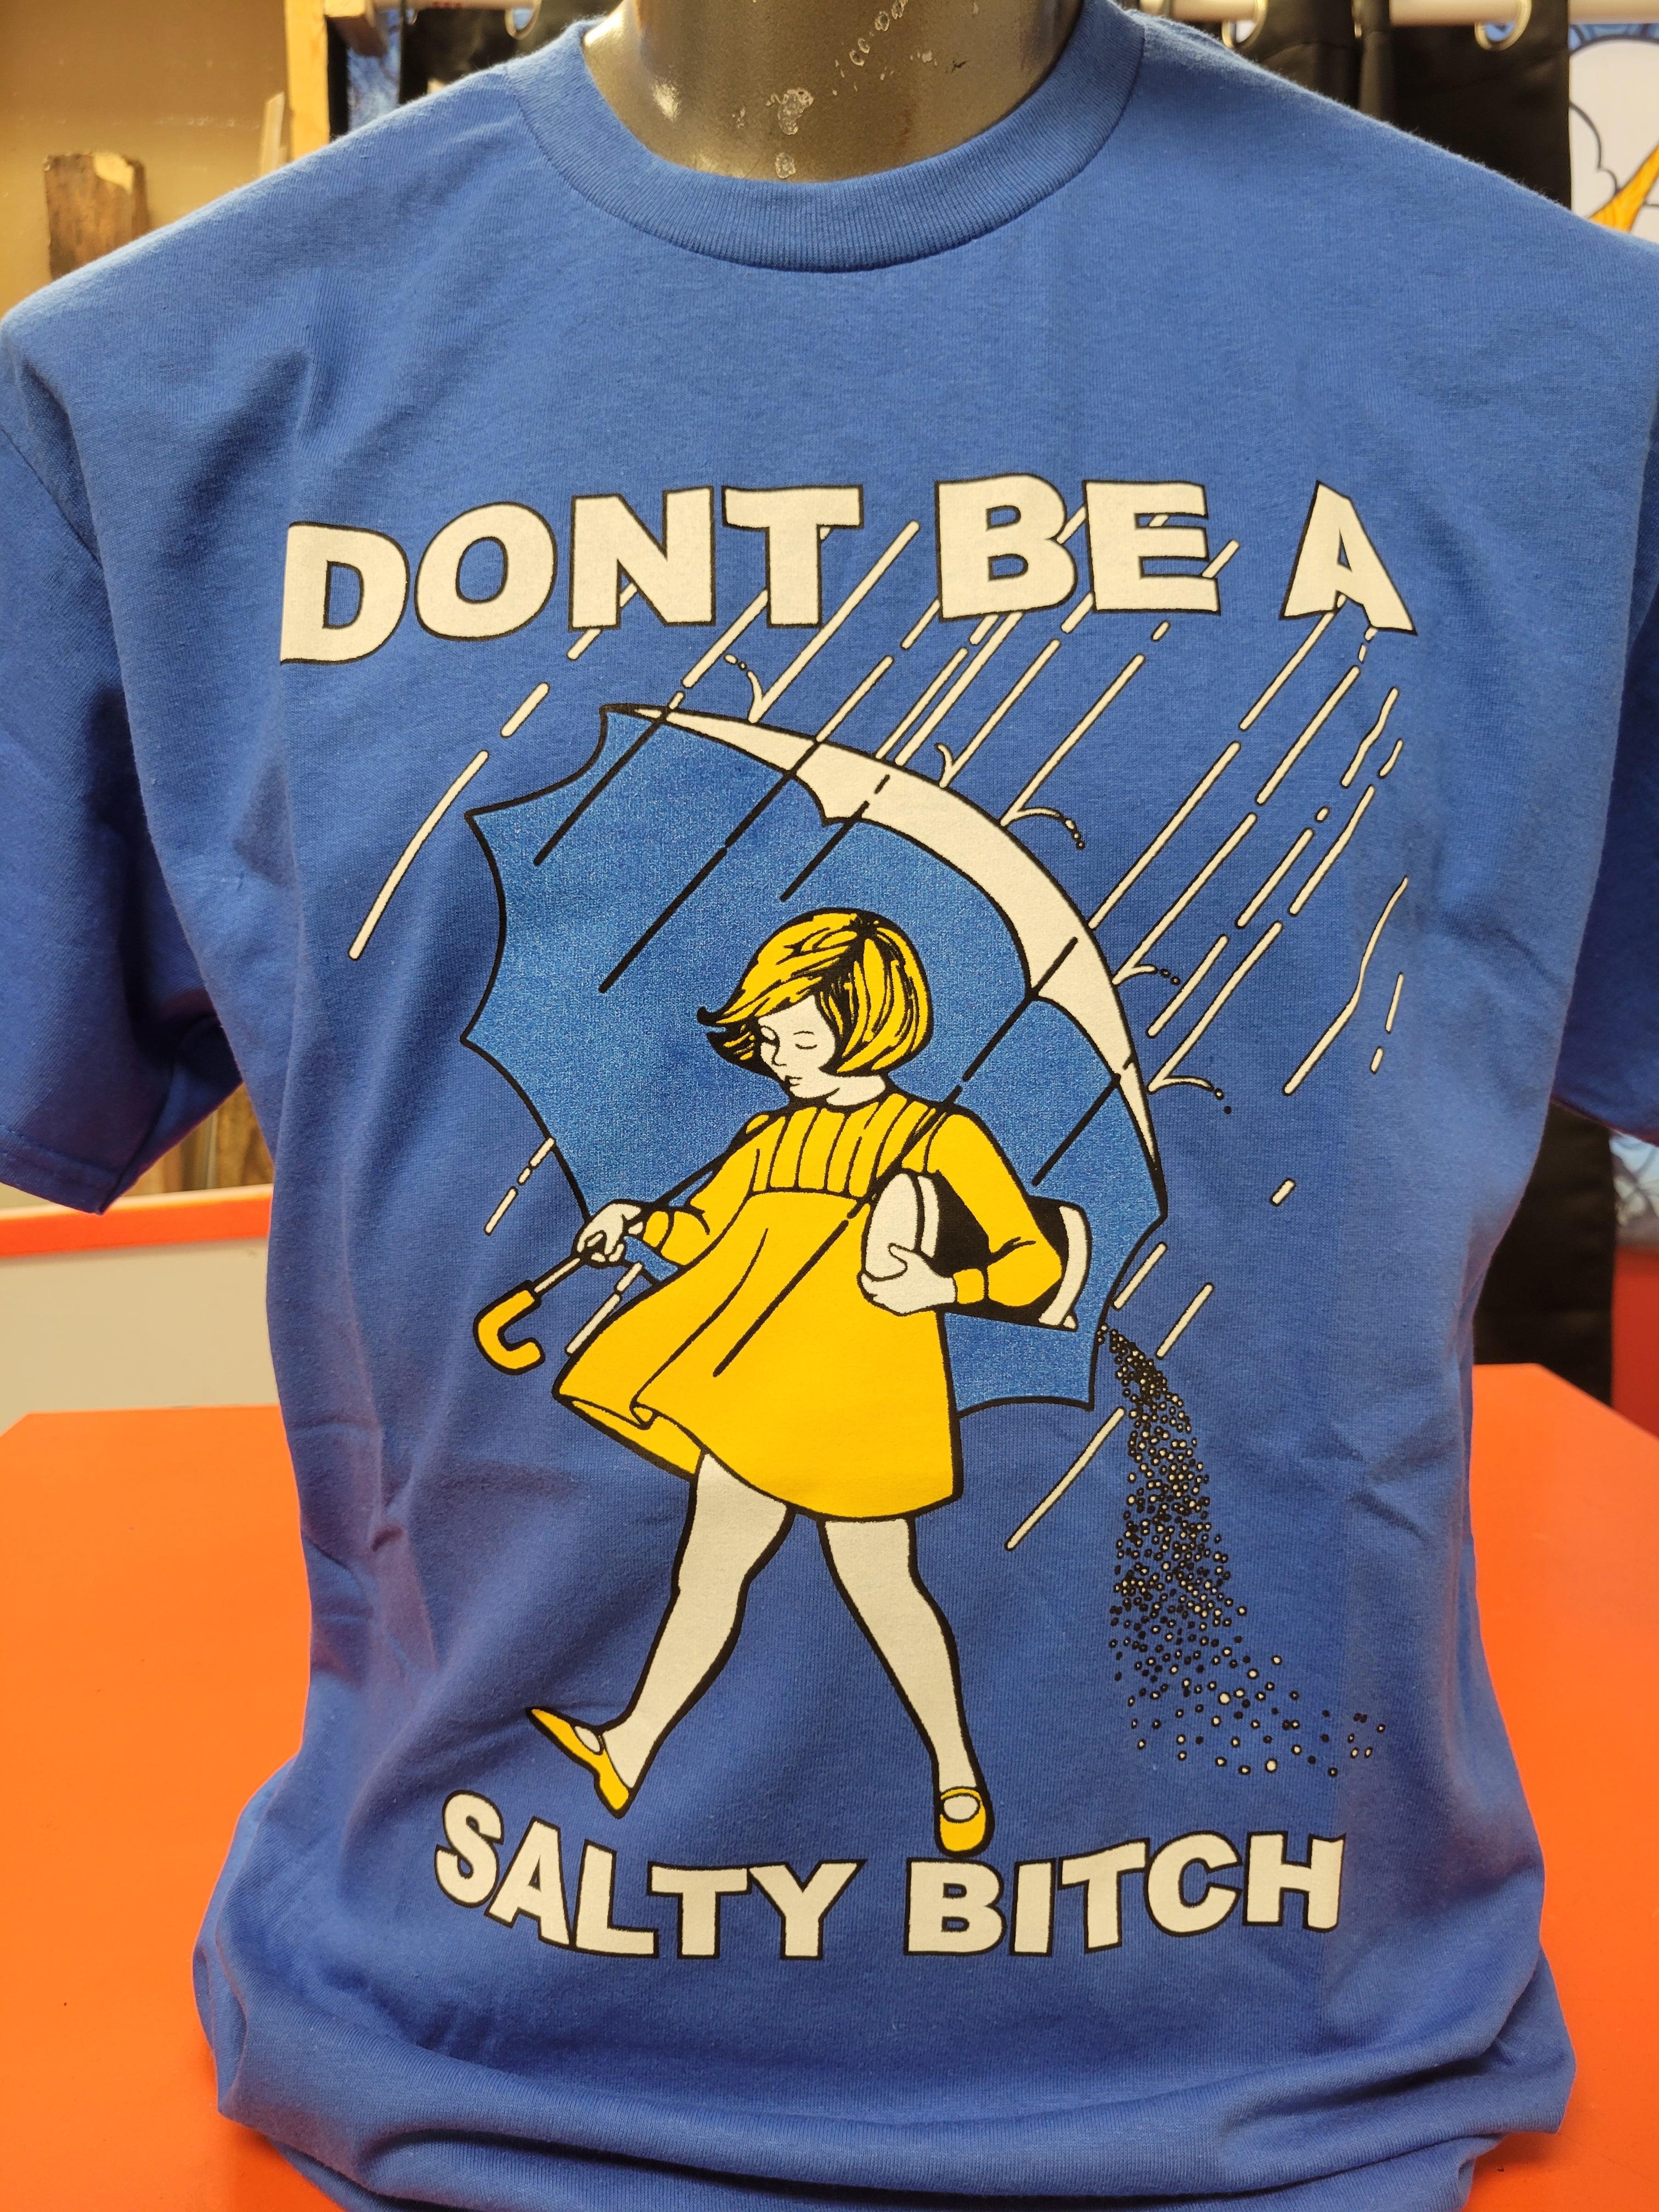 Salty bitch